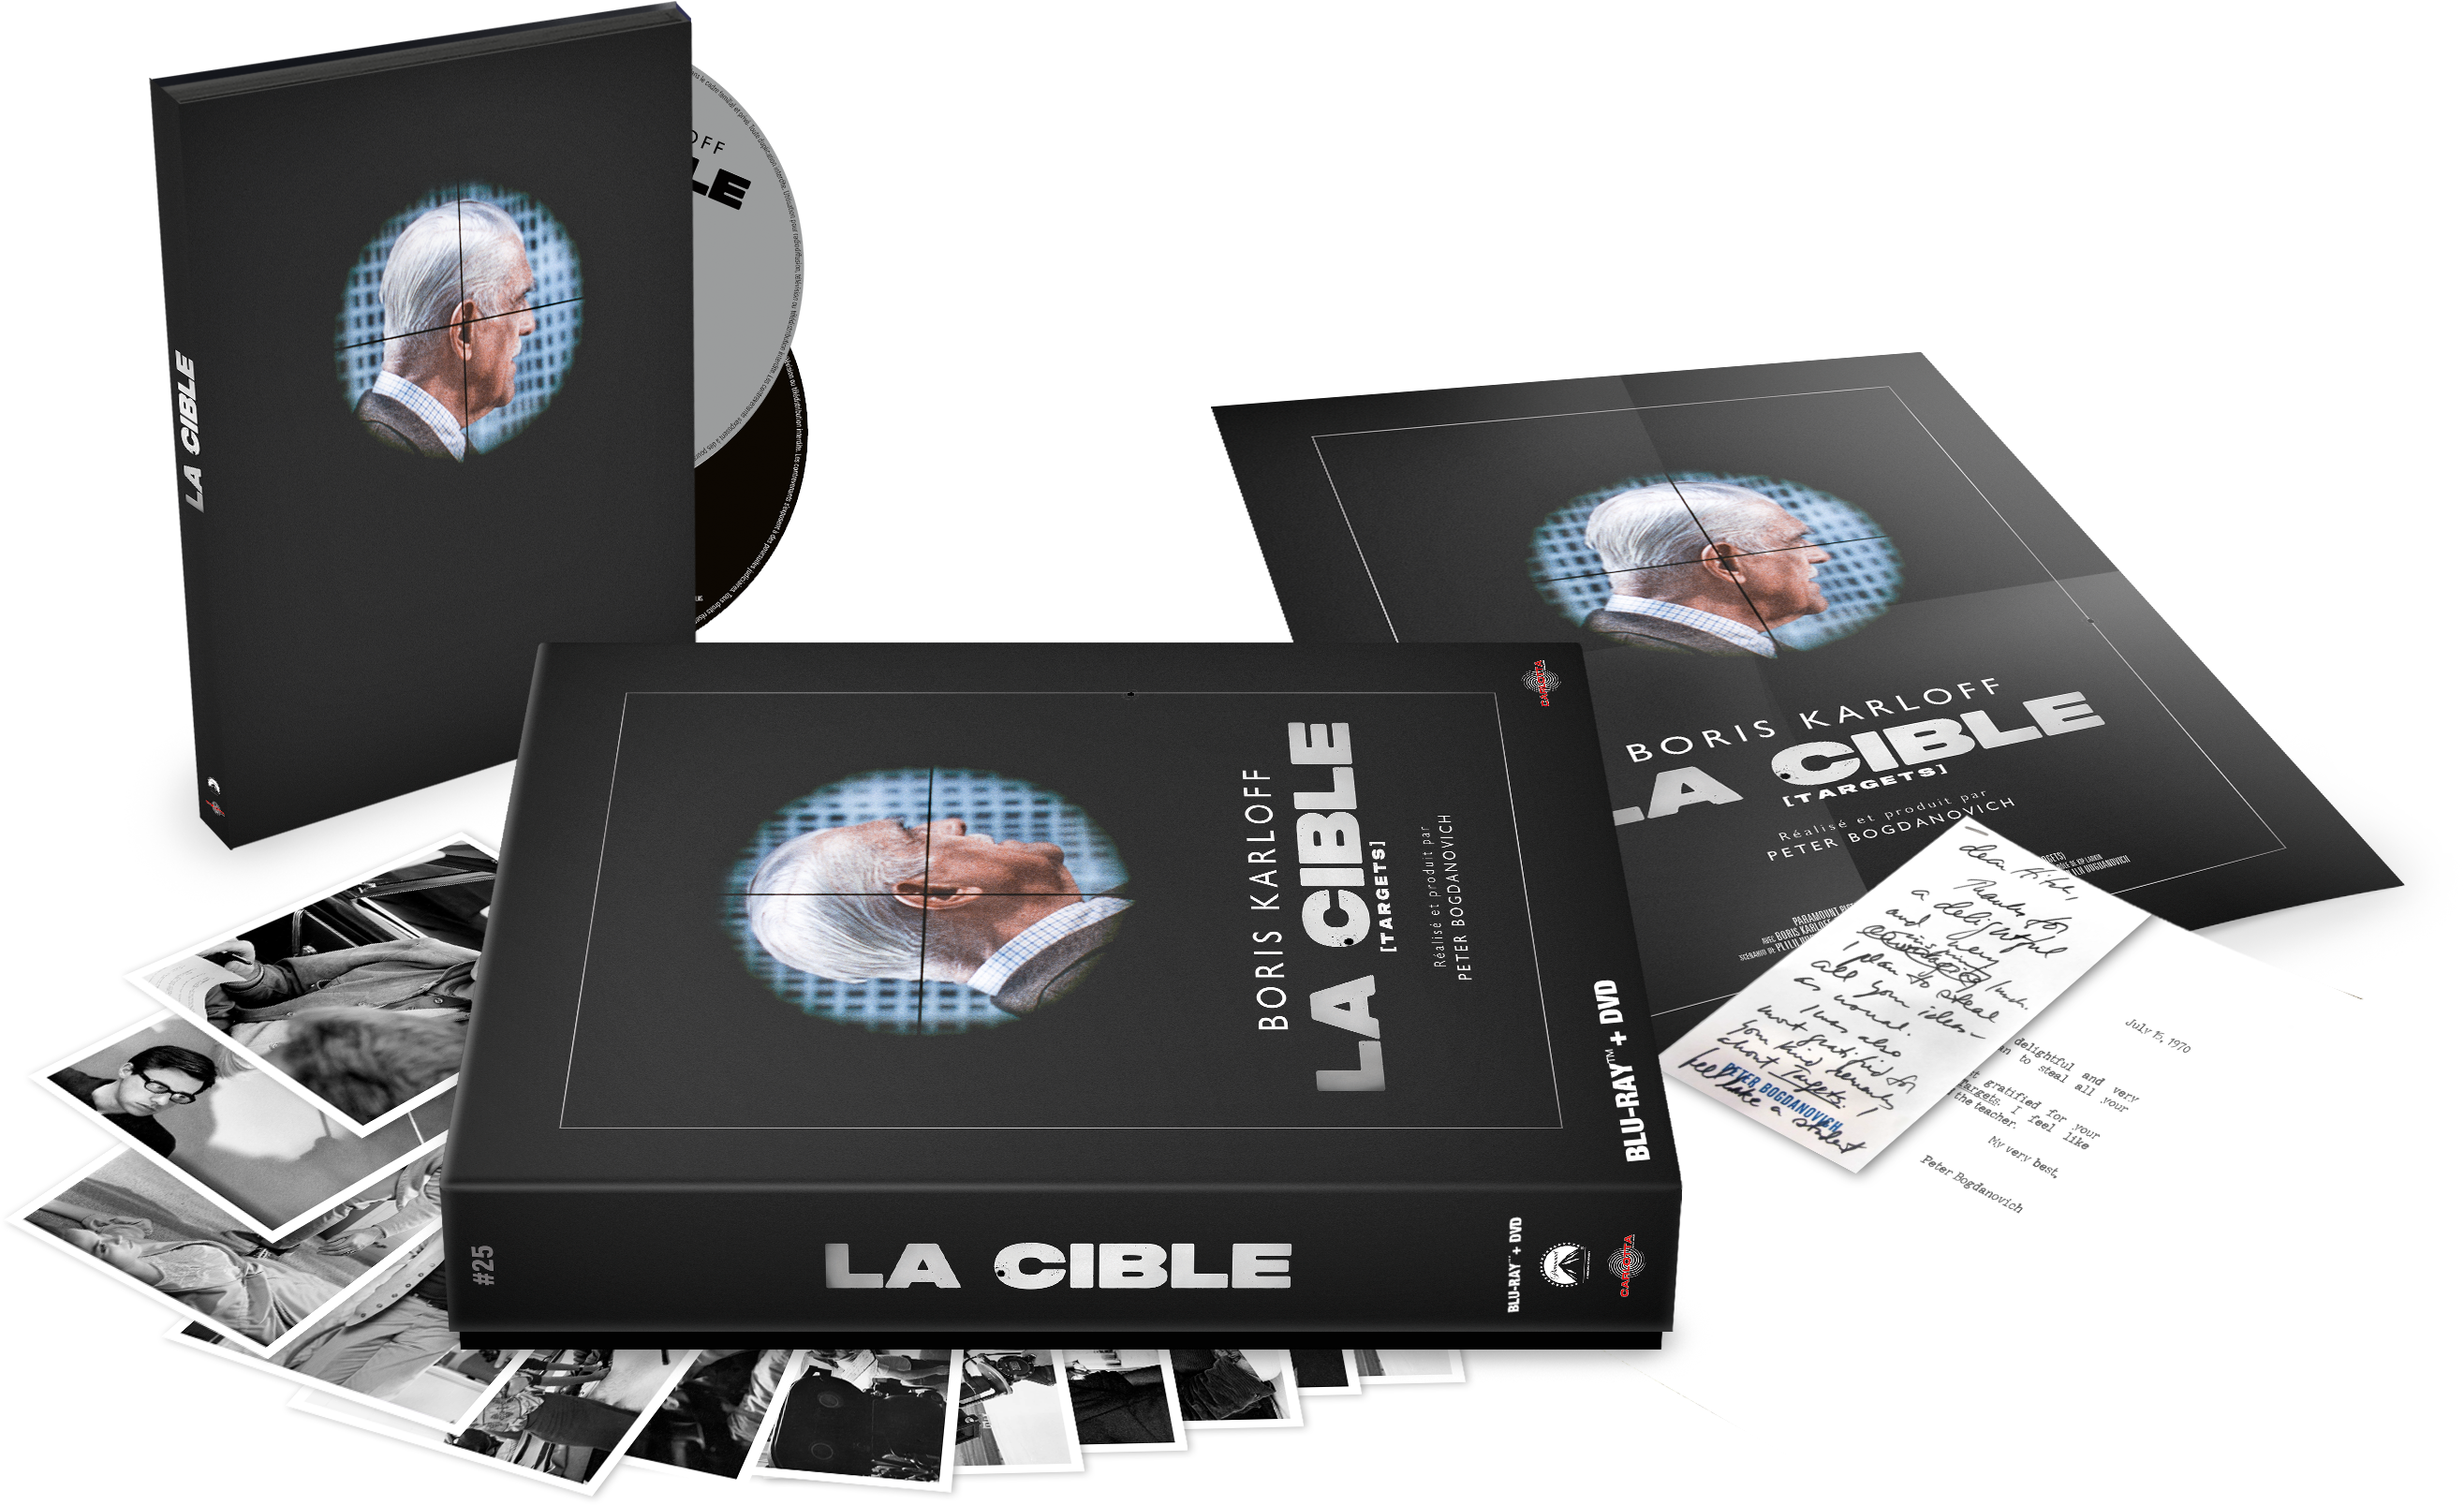 Targets - Limited Prestige Edition Blu-ray + DVD + Memorabilia